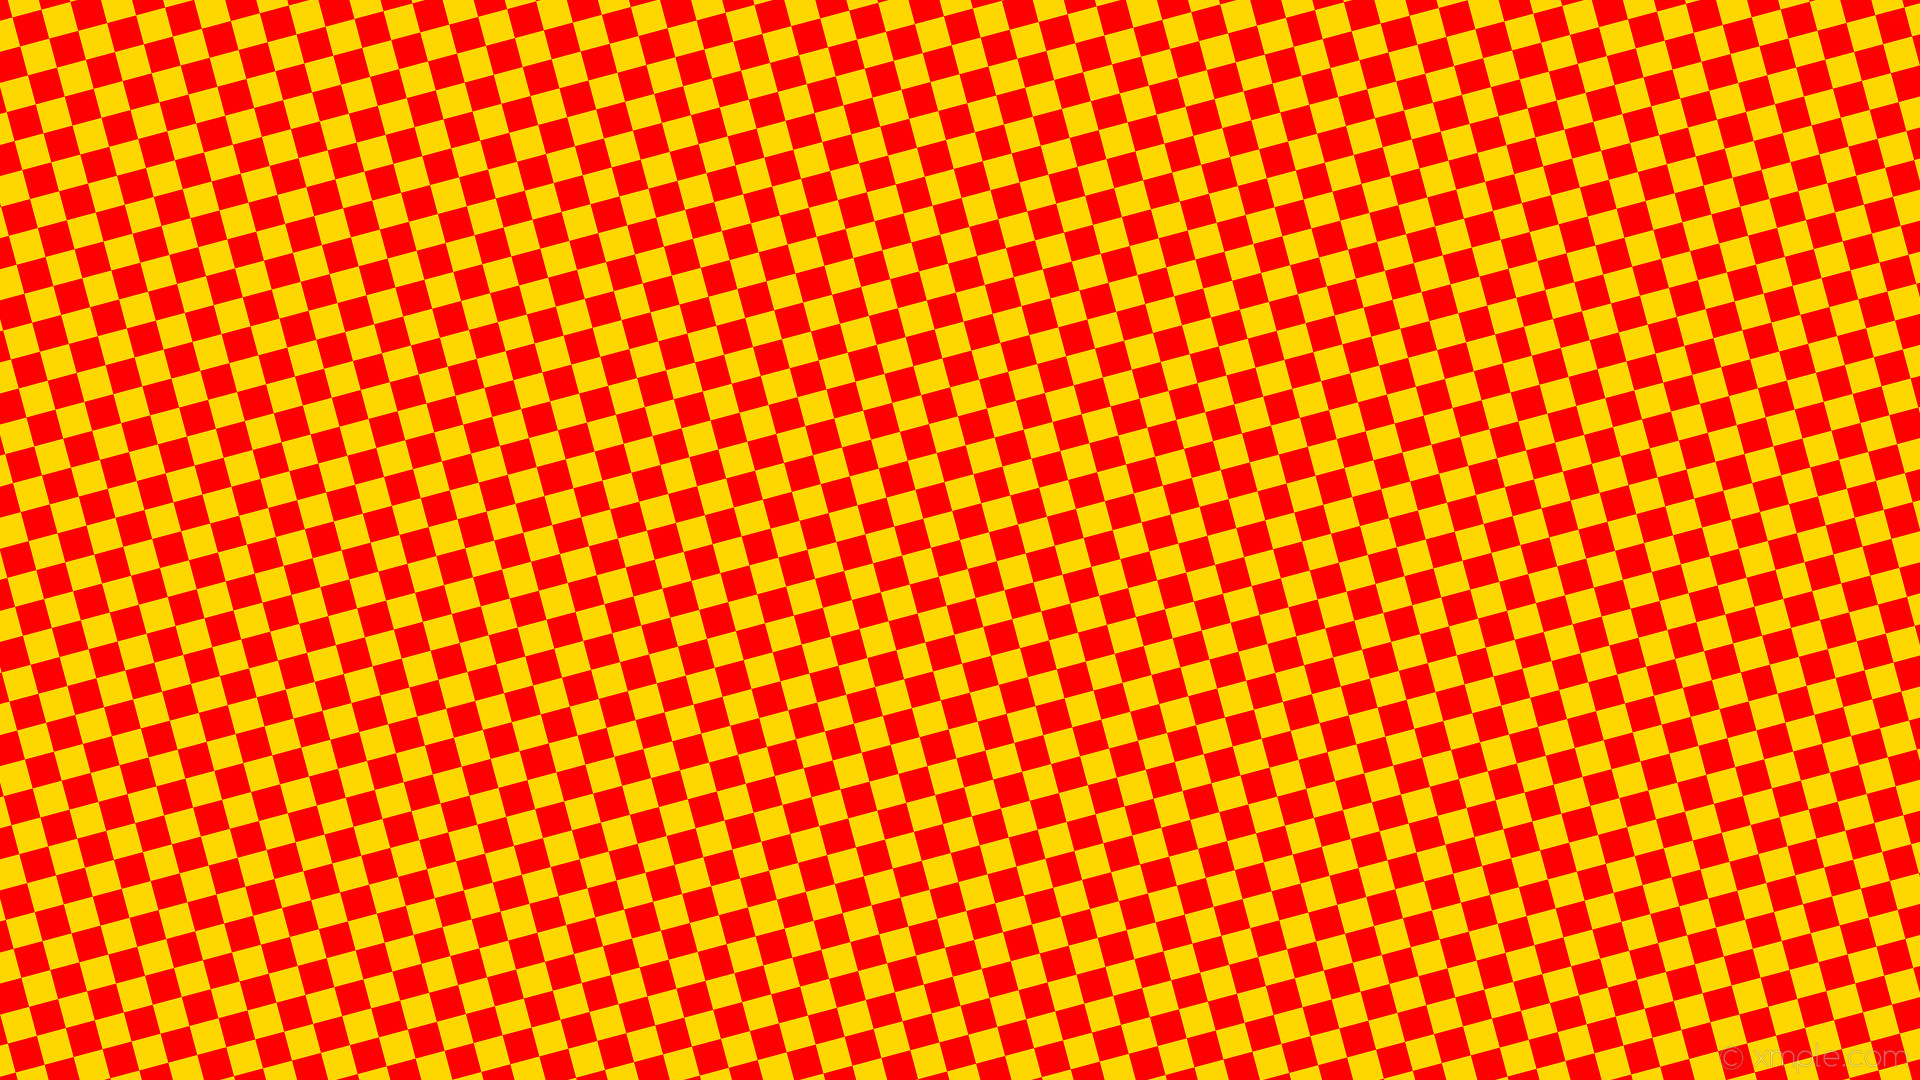 1920x1080 wallpaper squares checkered yellow red gold #ffd700 #ff0000 diagonal 15Â°  30px